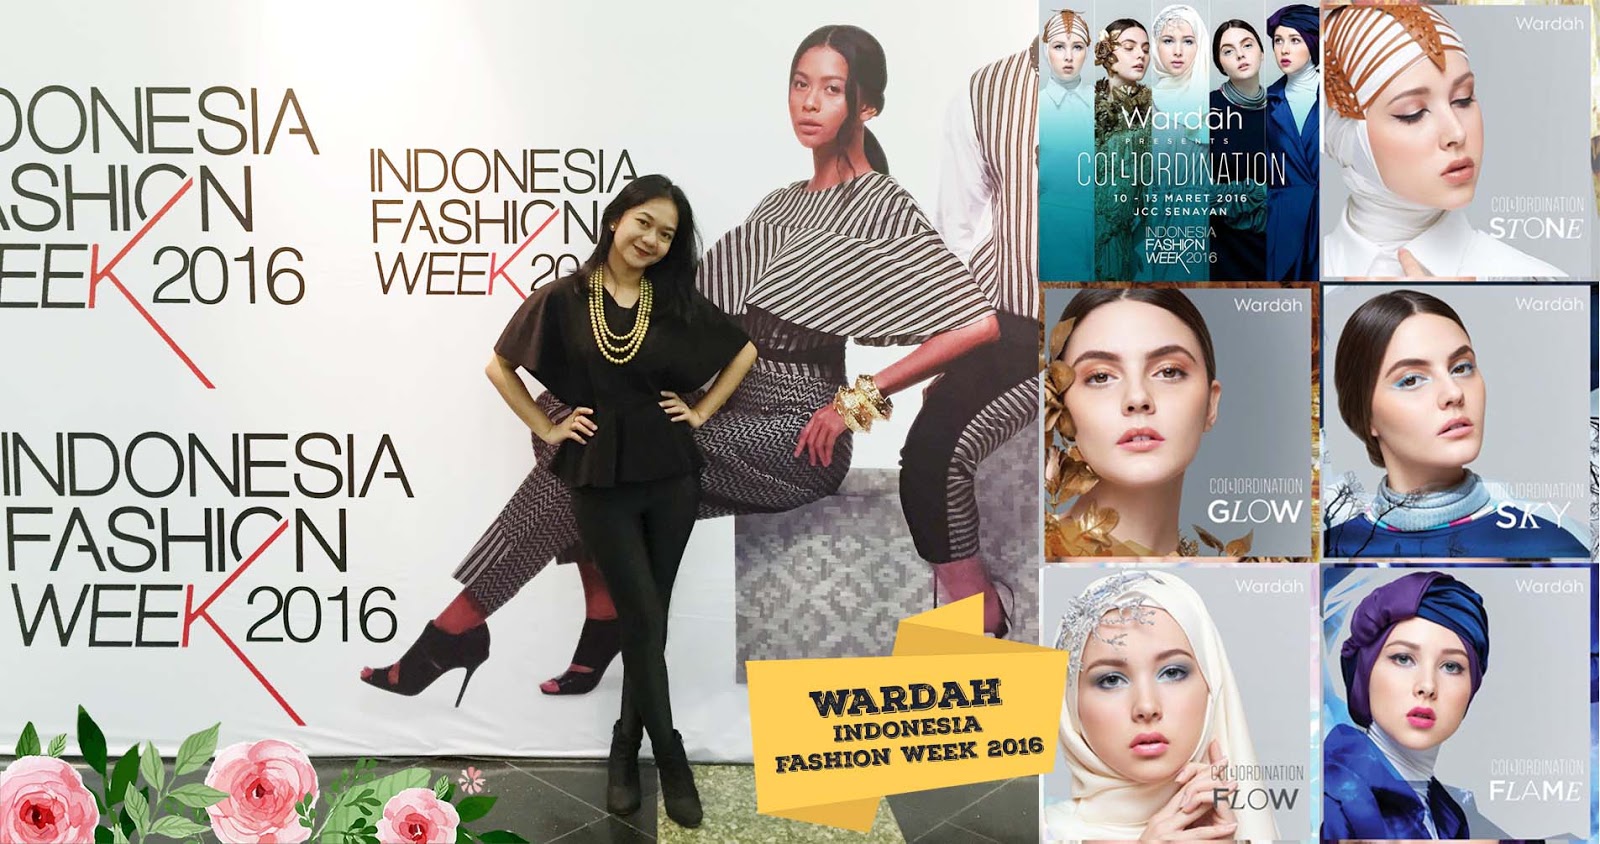 COLORDINATION Wardah For Indonesia Fashion Week 2016 Roosvansia